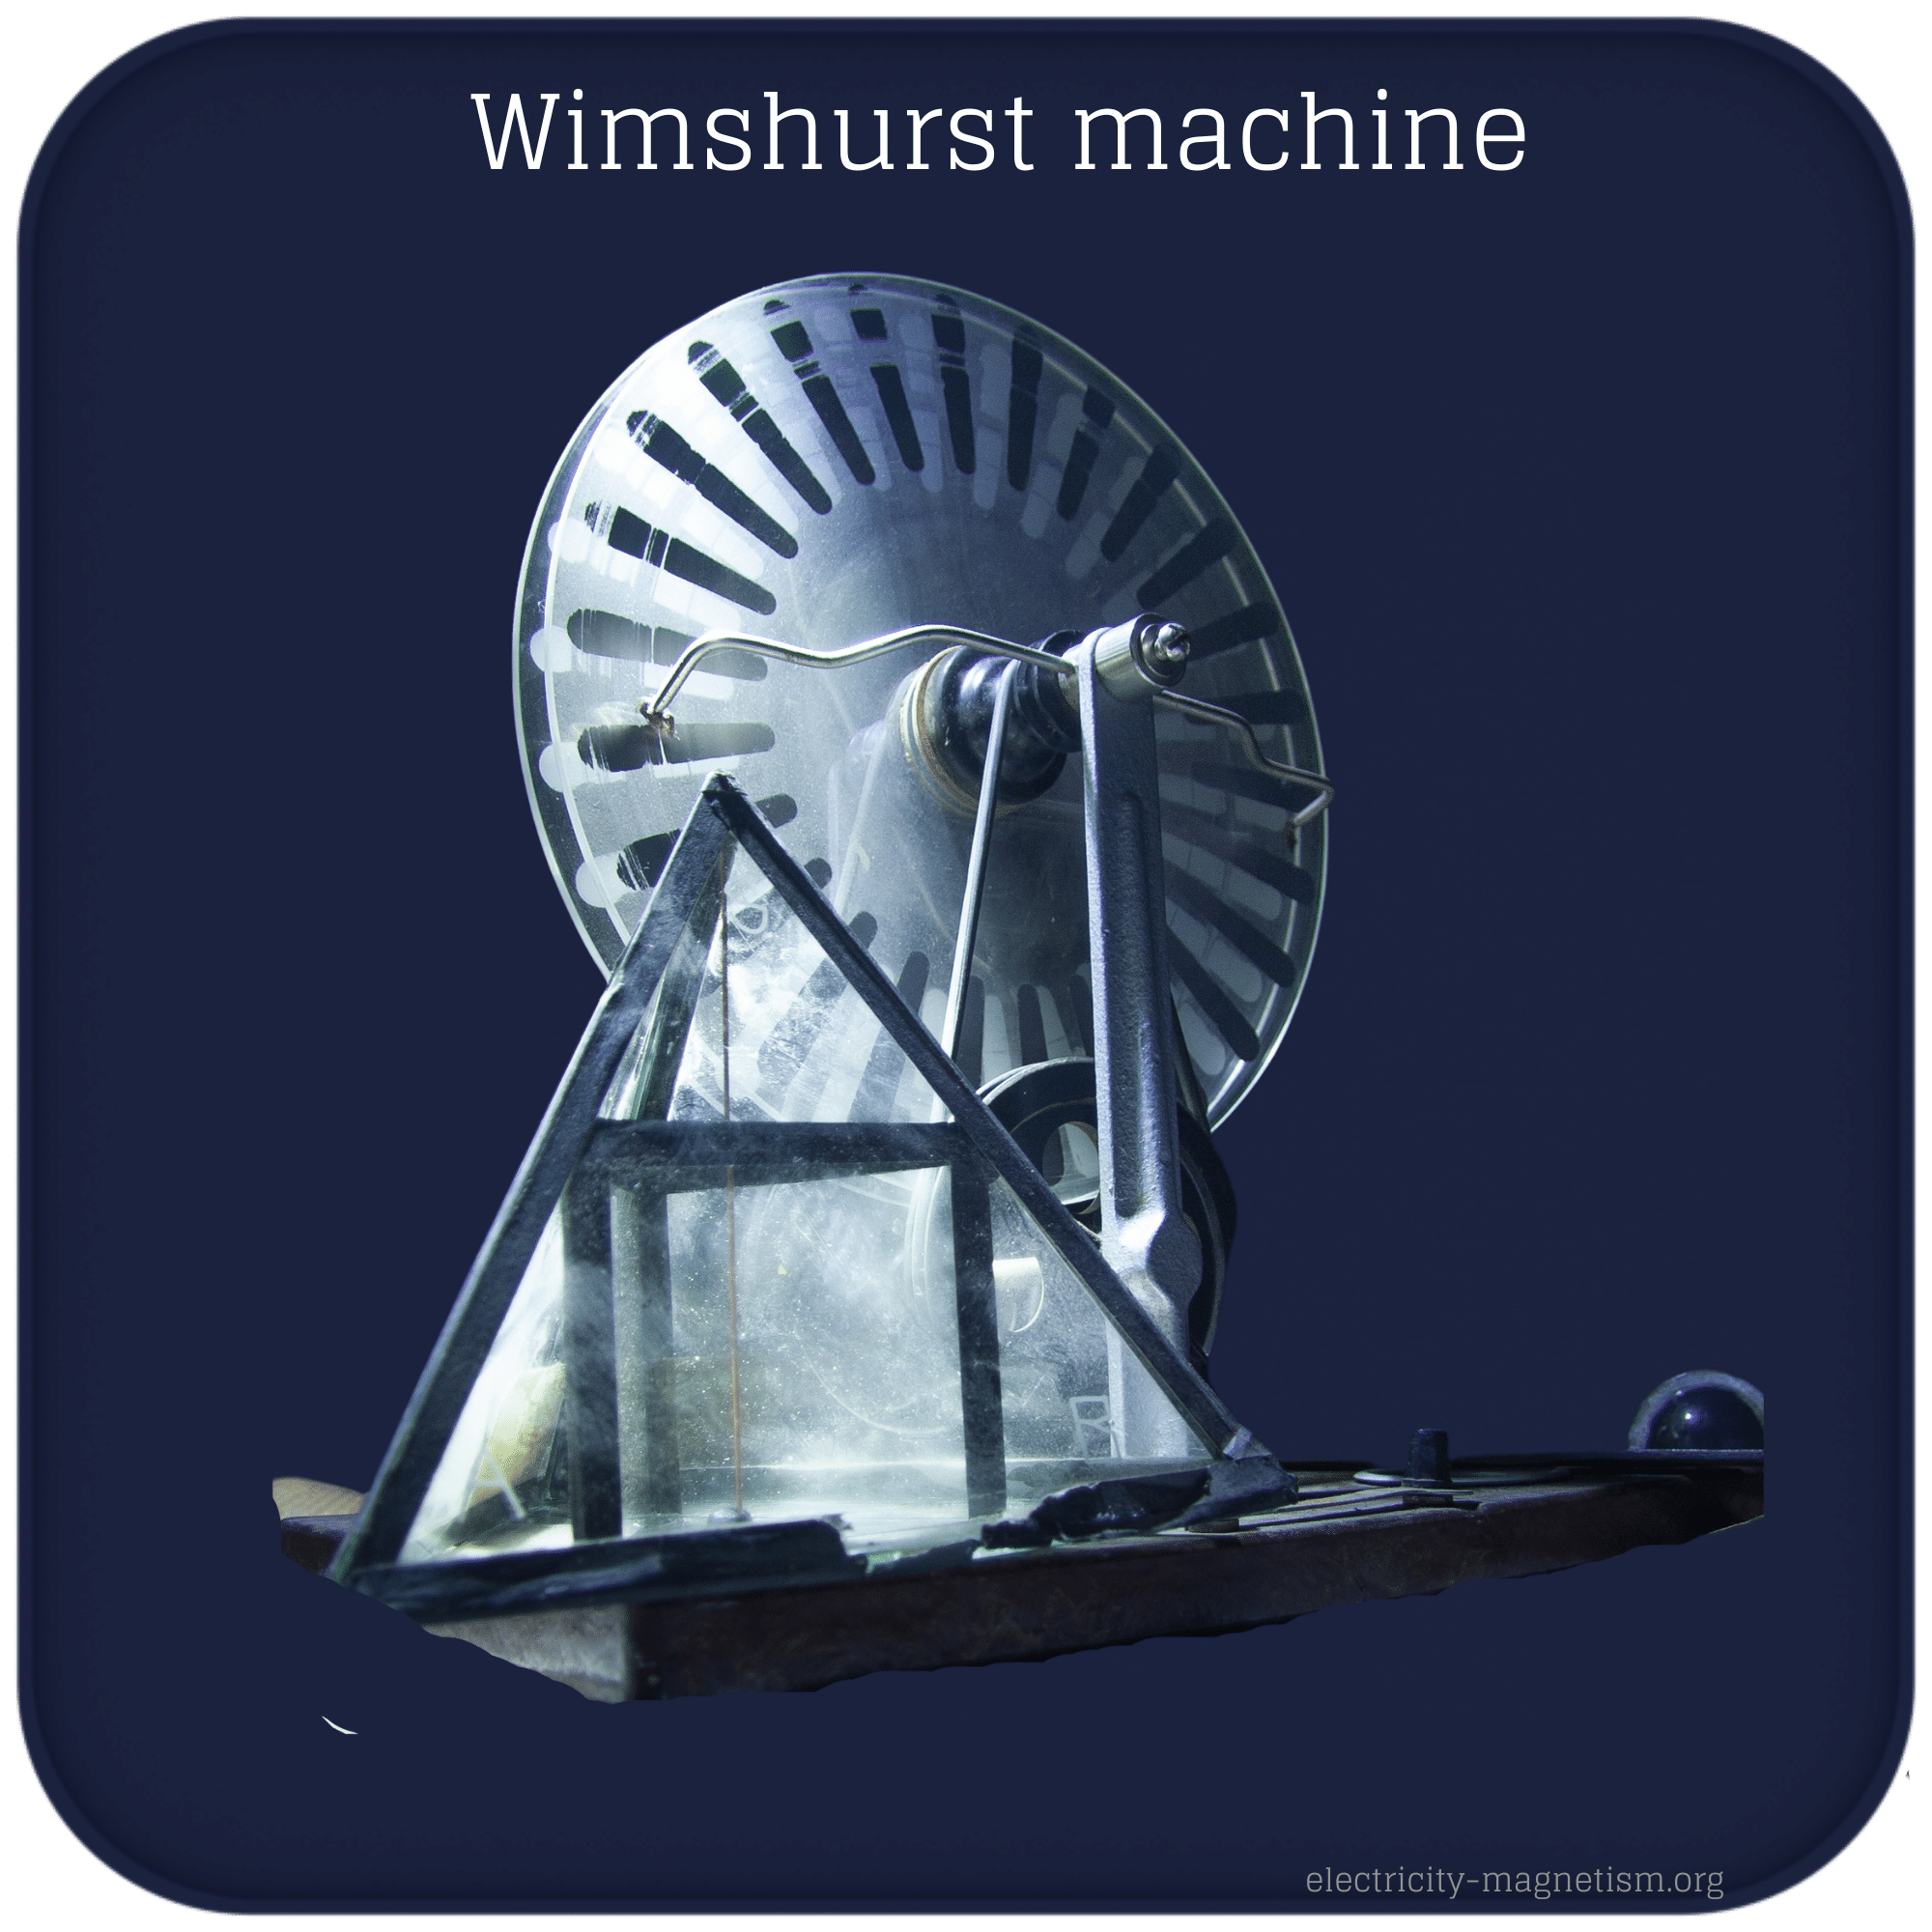 Wimshurst machine